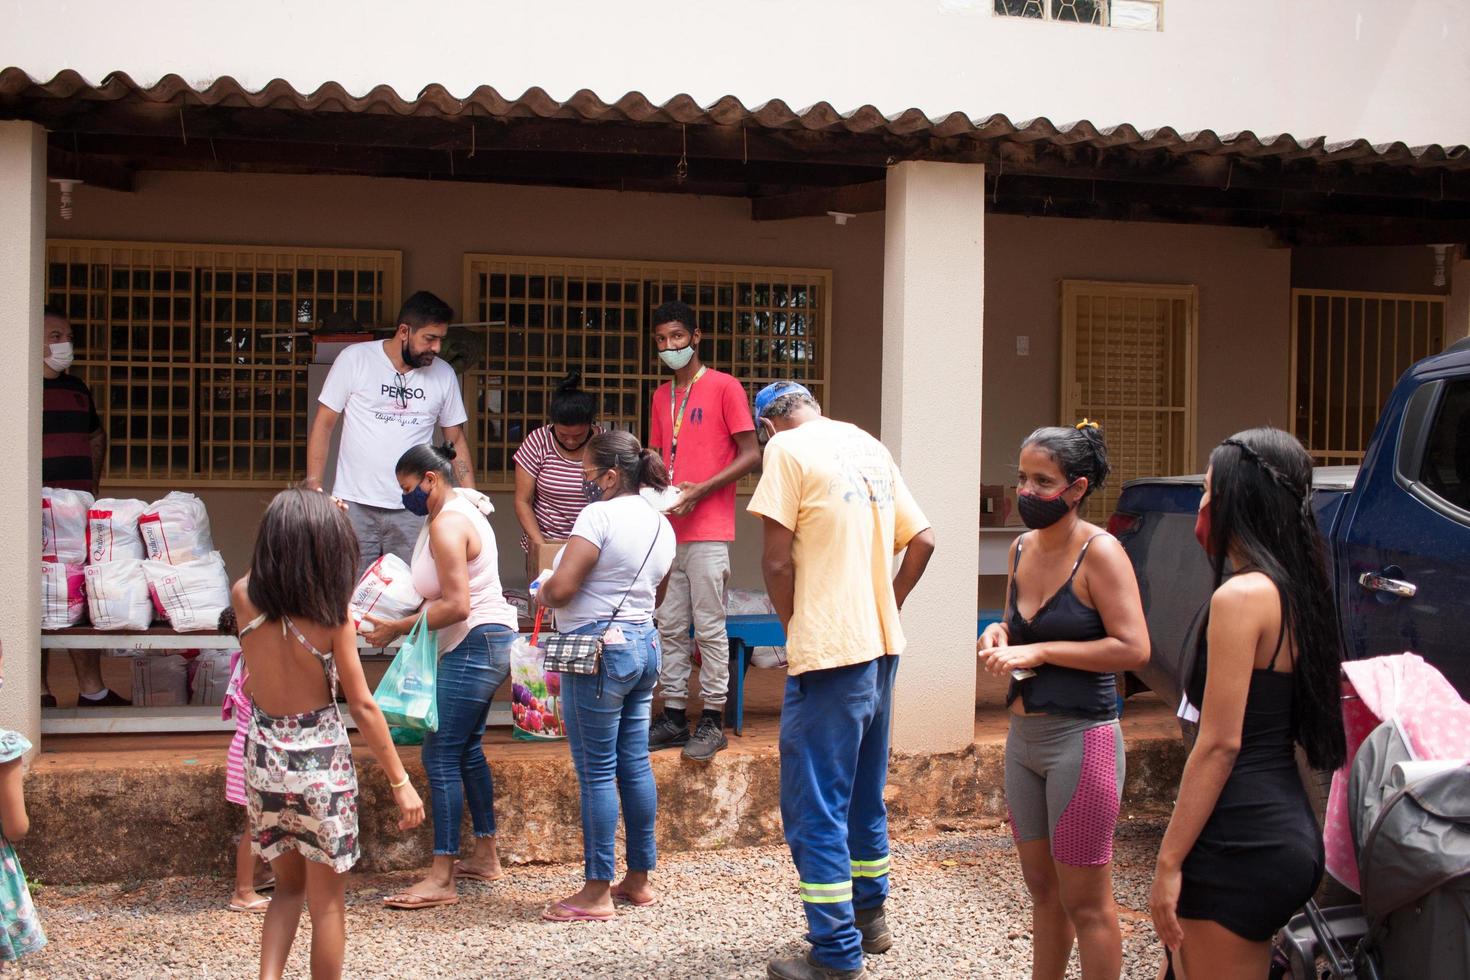 Planaltina, Brazil, 2-26-22-Local feeding center handing out food photo